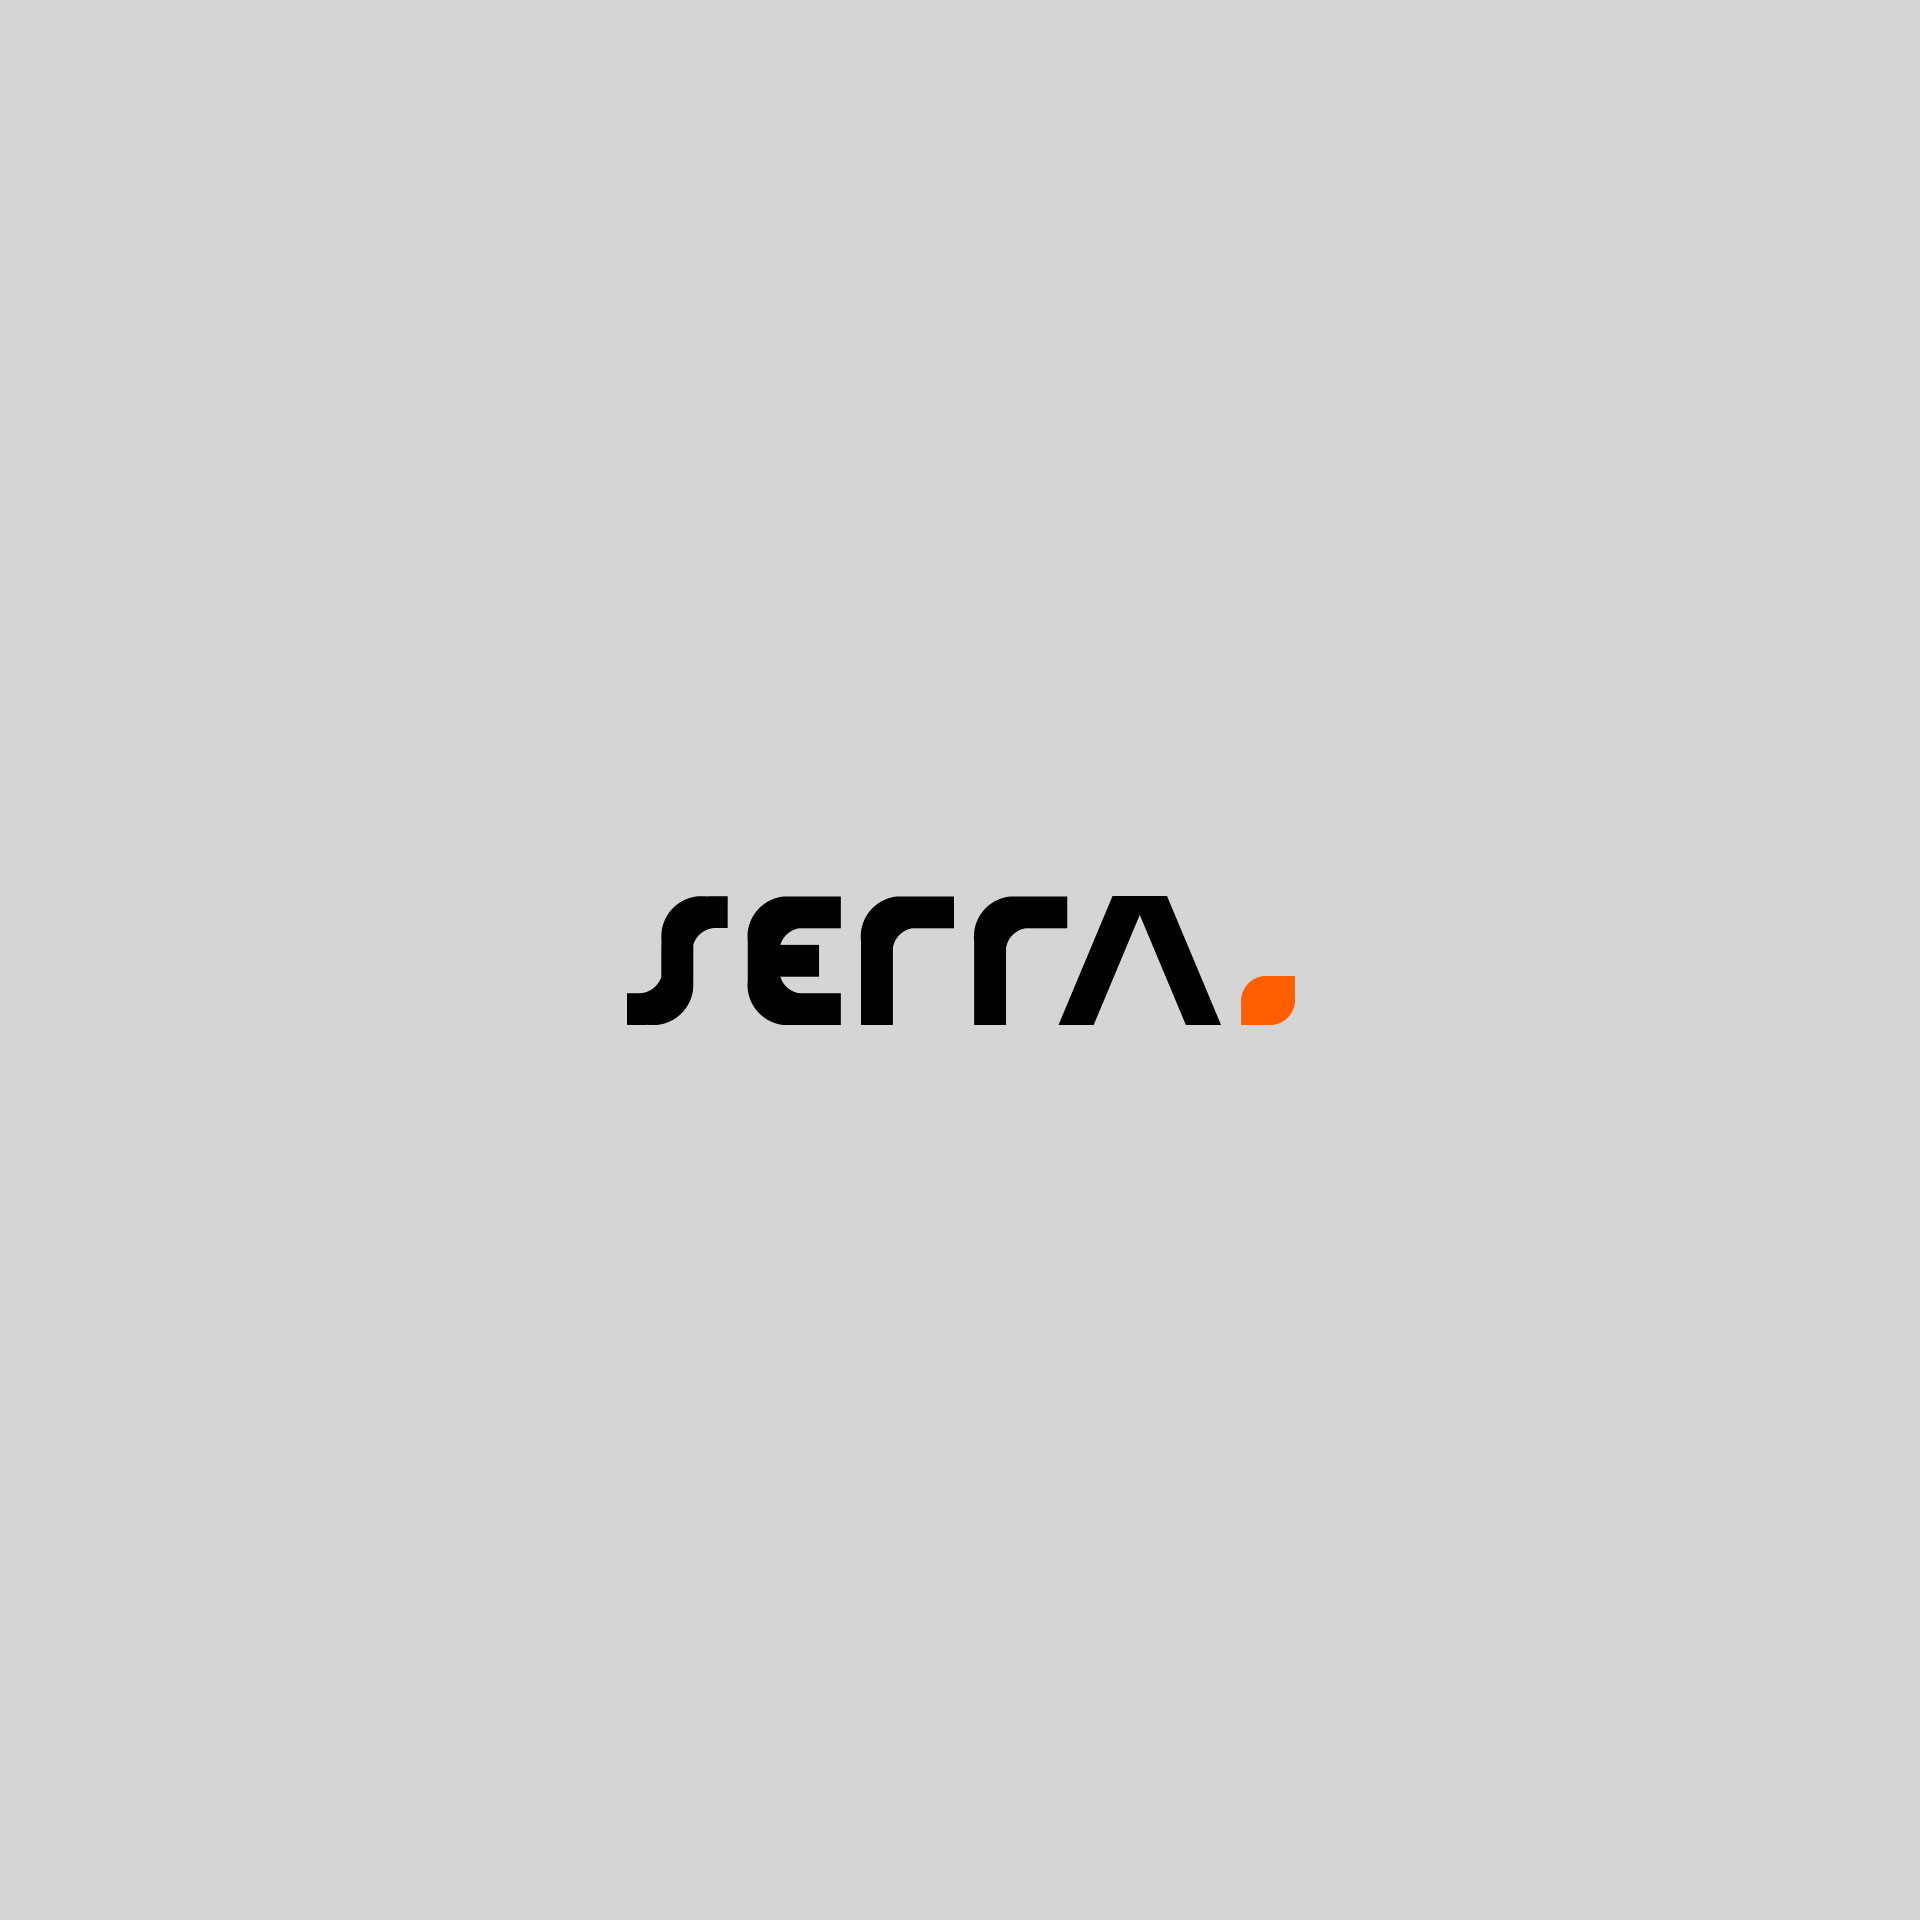 Nícolas Kosienczuk Design Creates Serra Construction Company Brand Identity